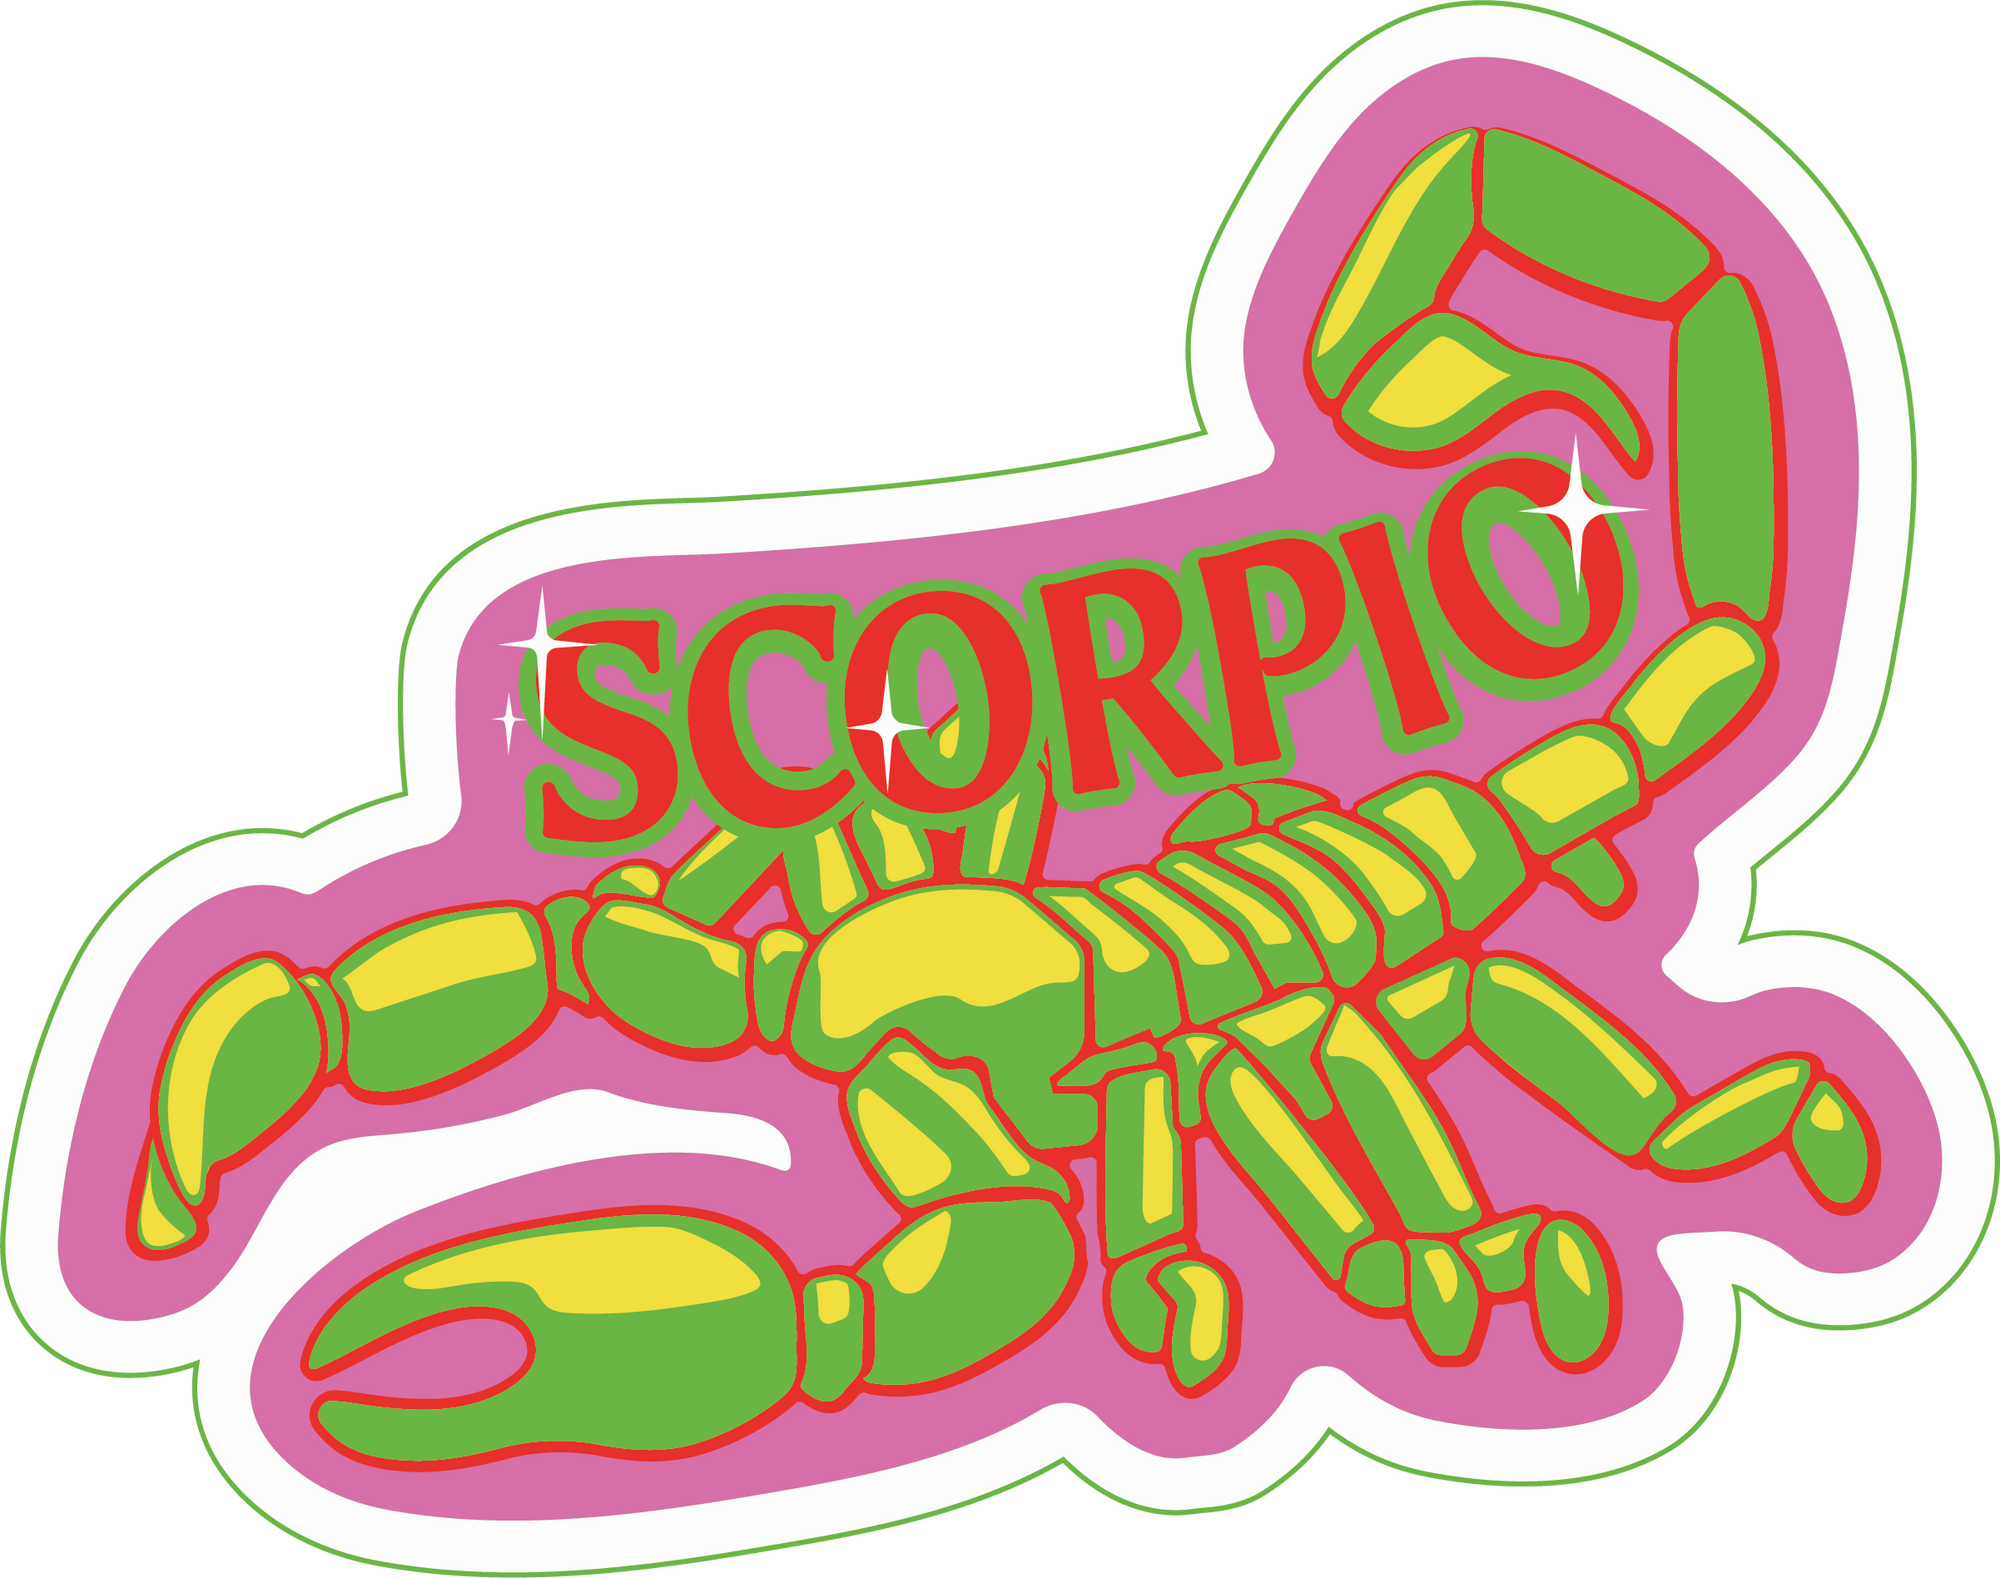 scorpio - seol gold